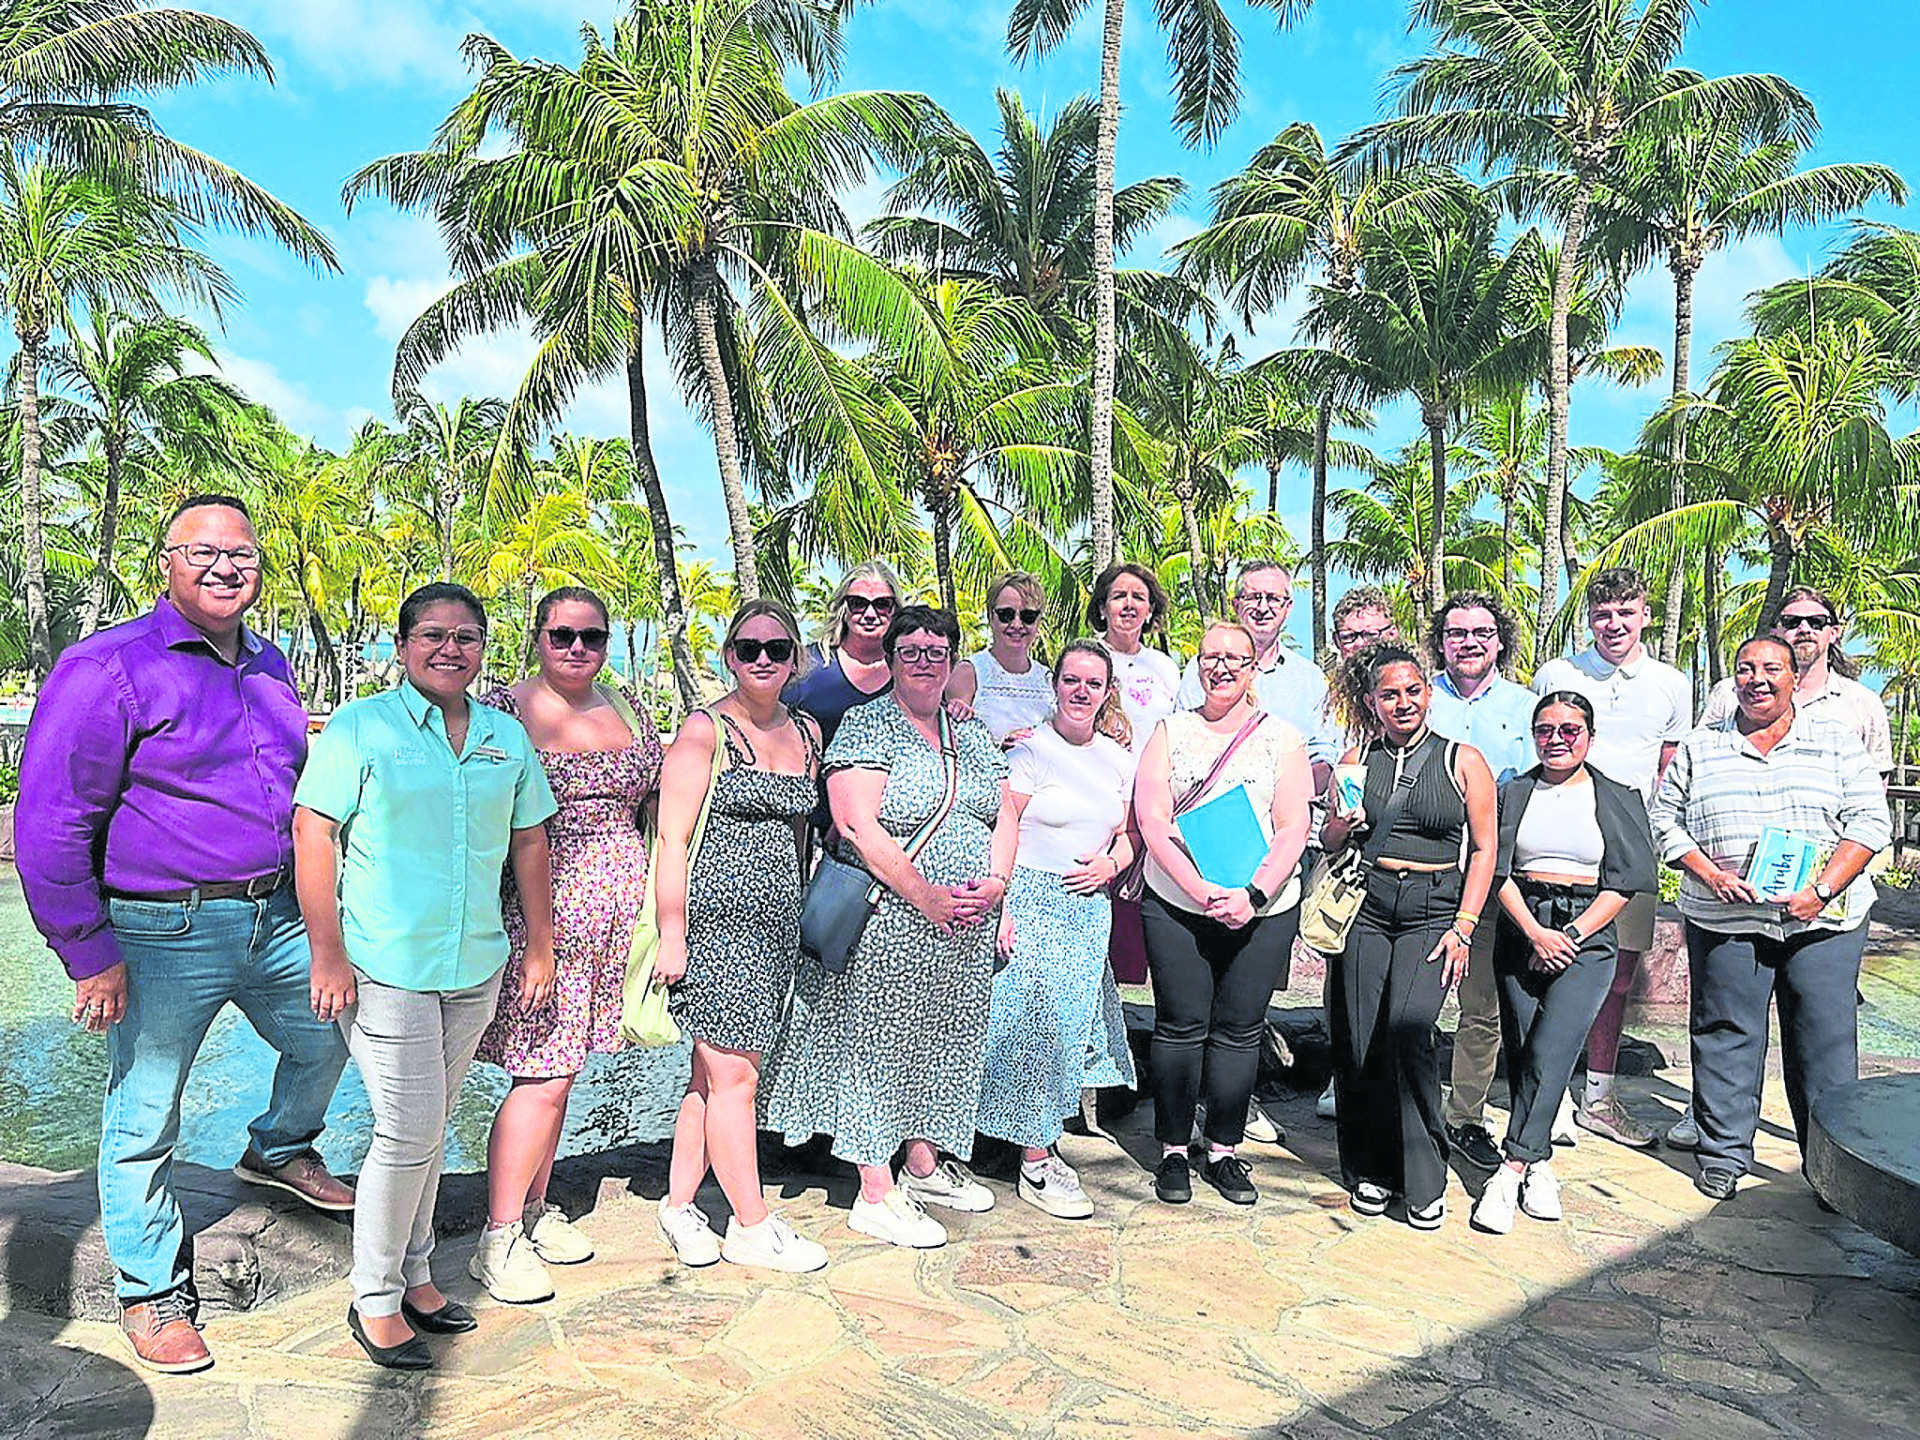 SWC tourism students enjoy fun in Carribean sun